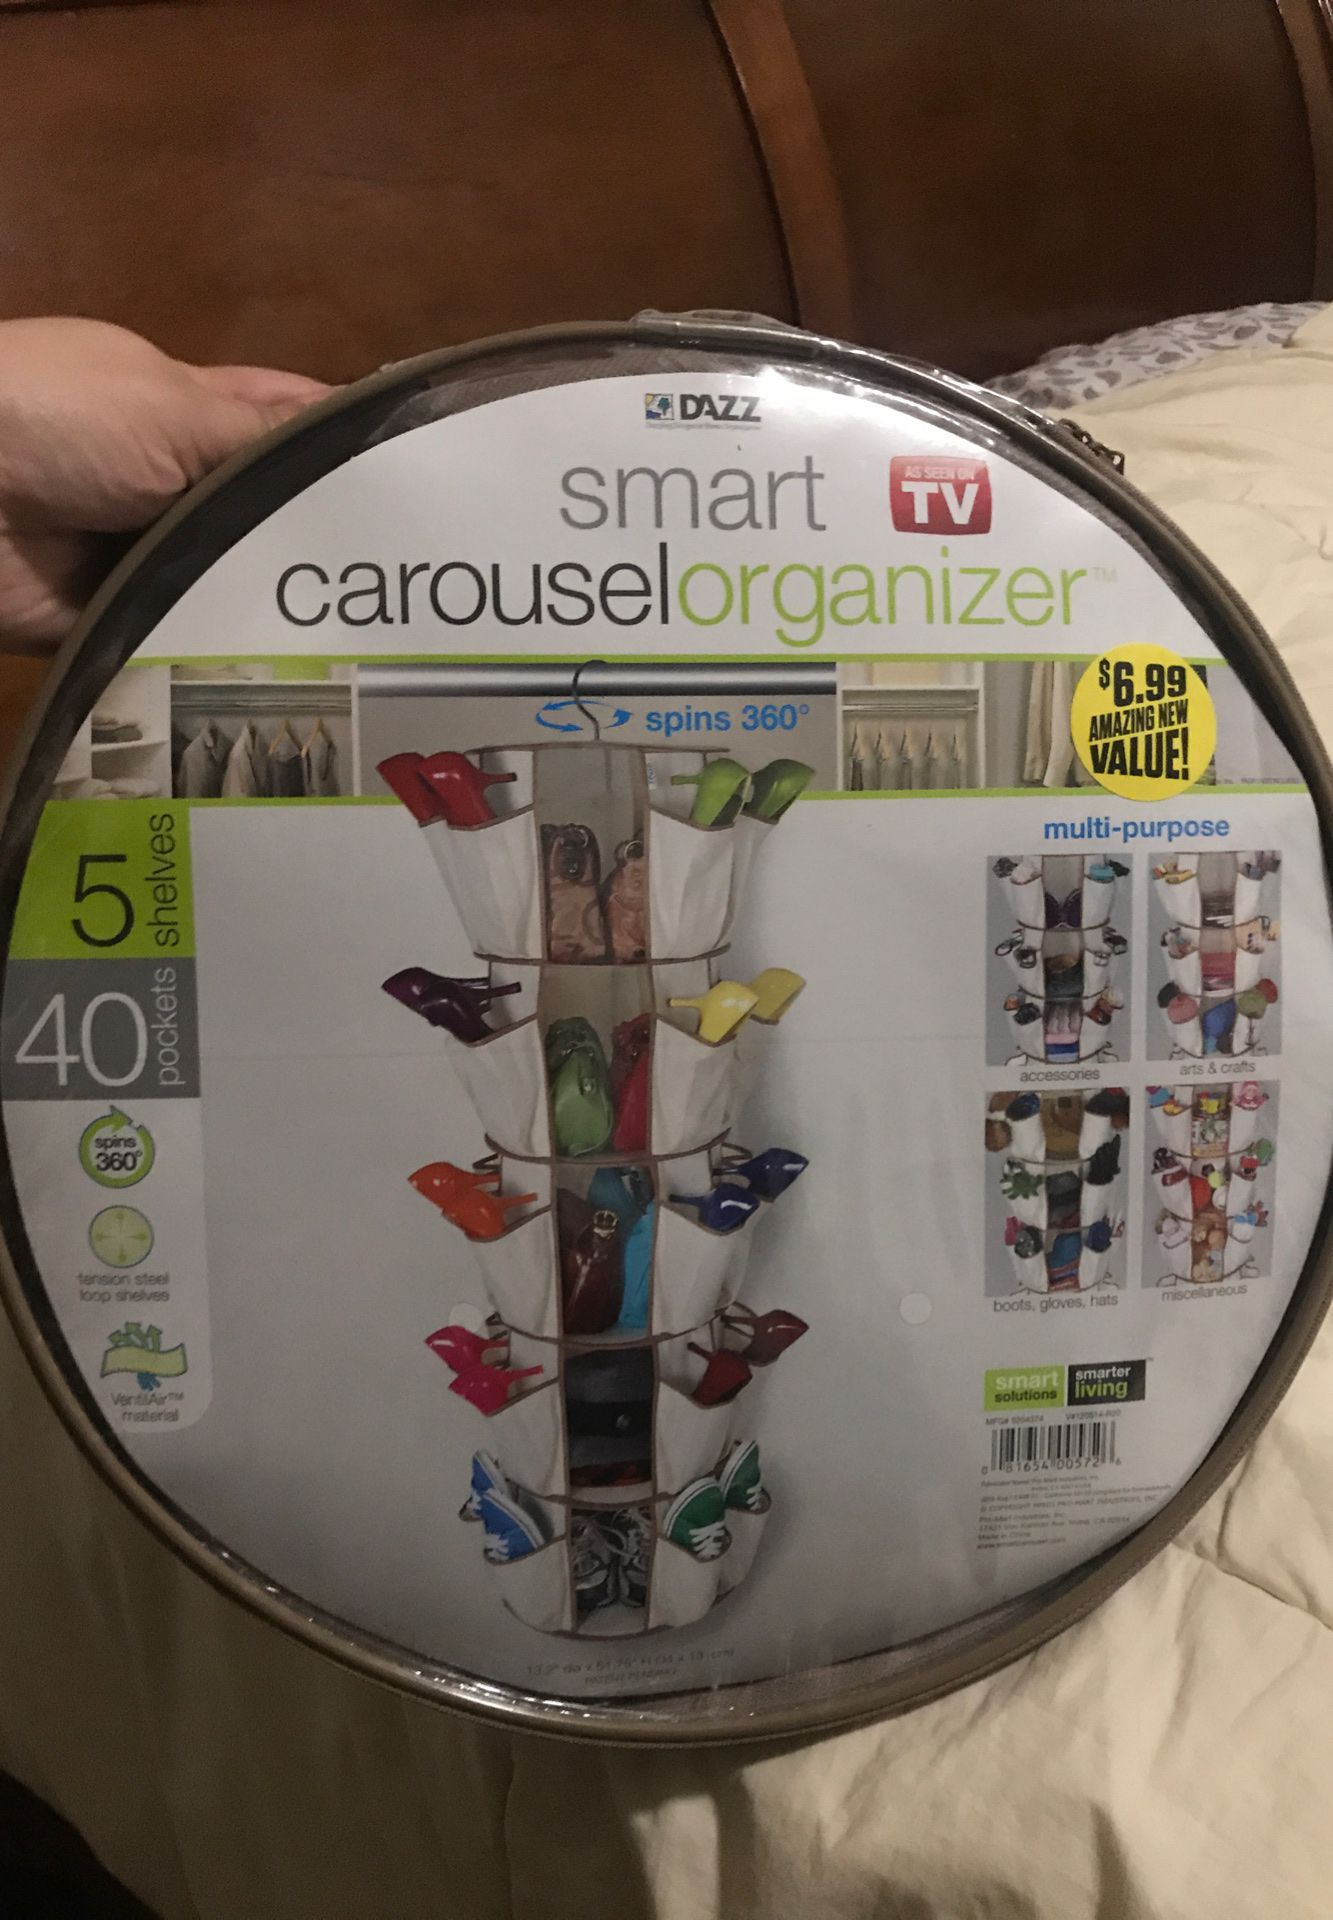 Smart carousel organizer